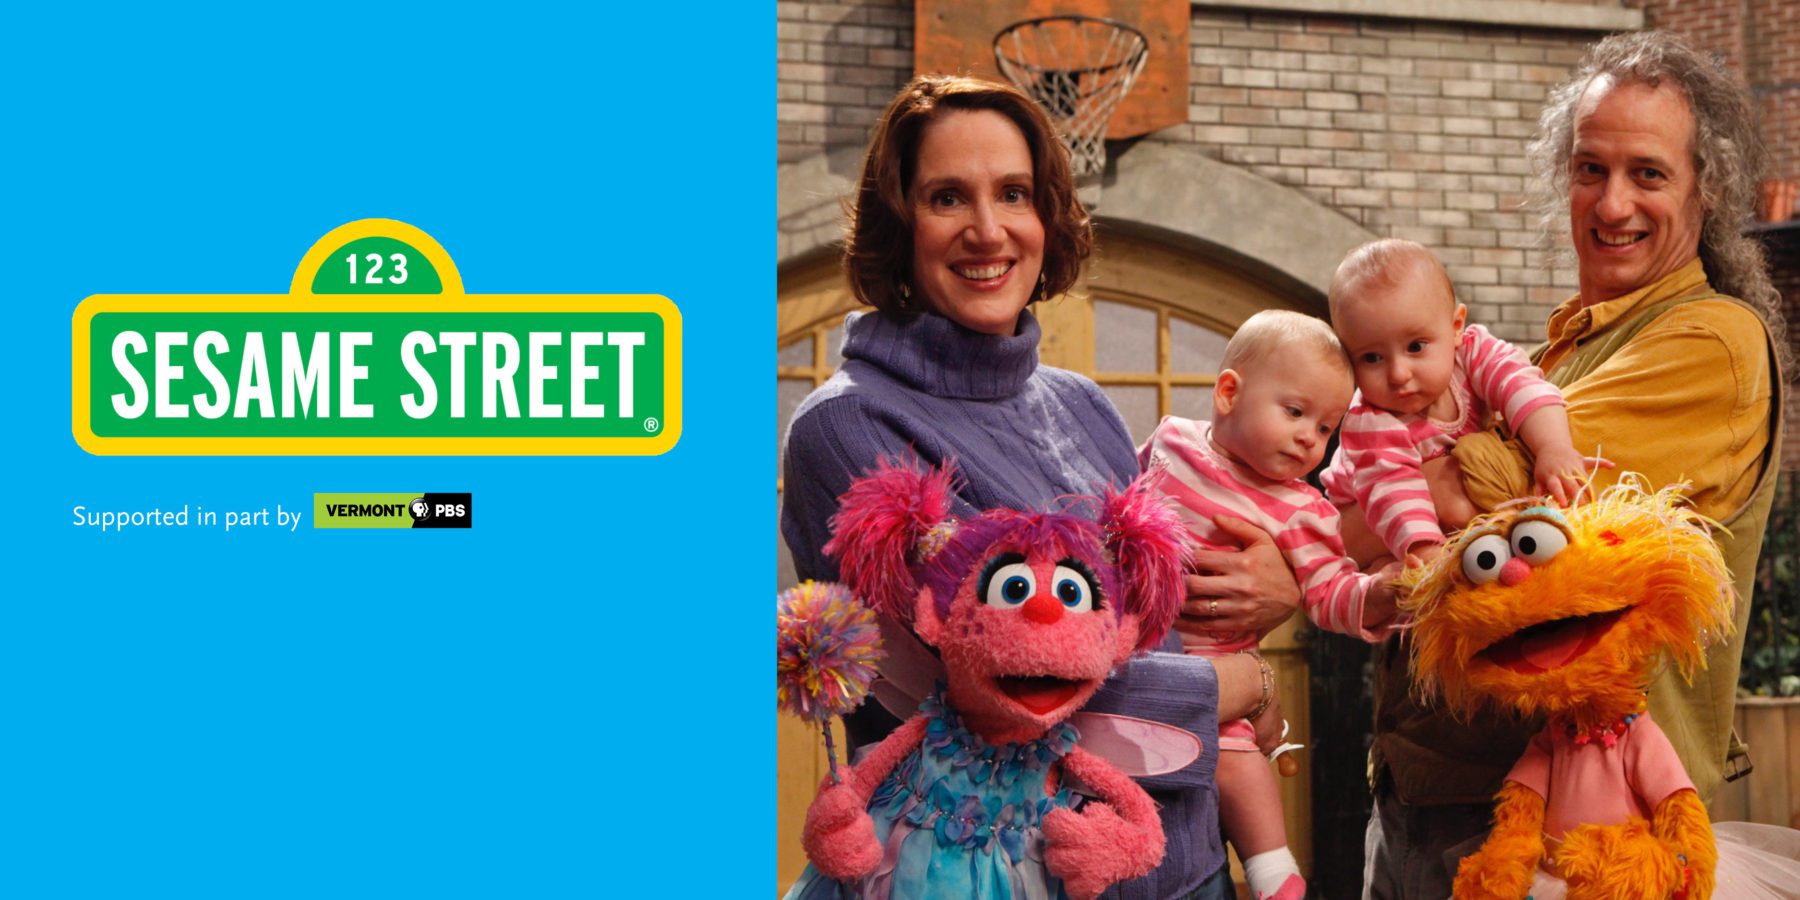 Sesame Street: The Longest Street in the World